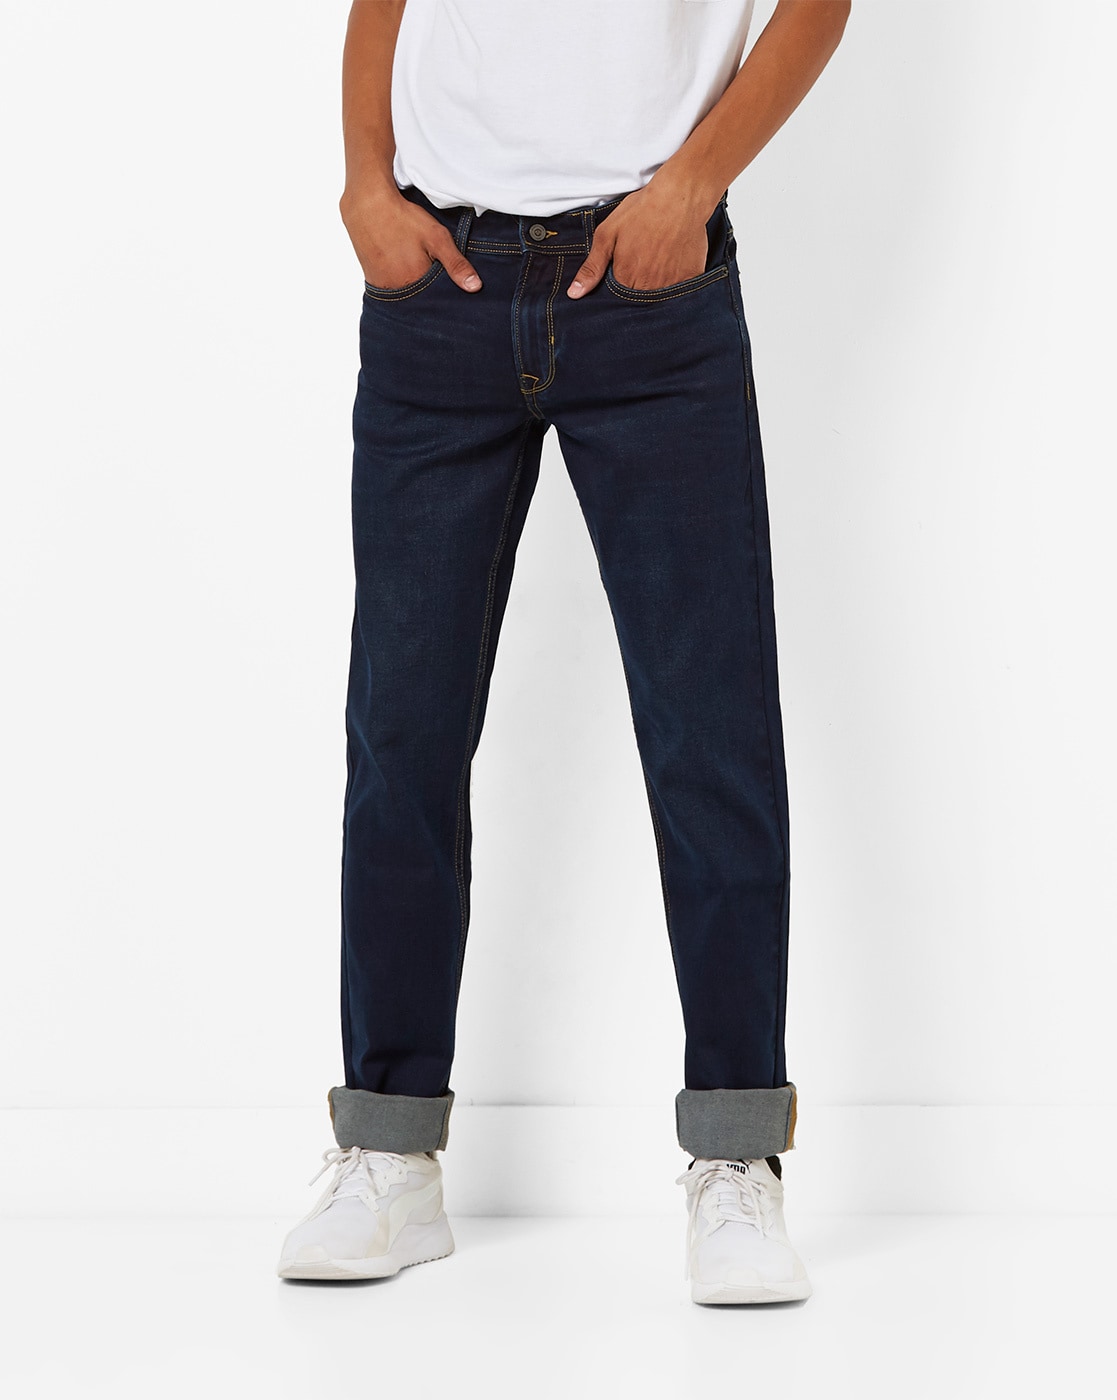 Buy PETER ENGLAND JEANS Men's Slim Fit Shirt (PESFMSLB721833_Navy 38) at  Amazon.in